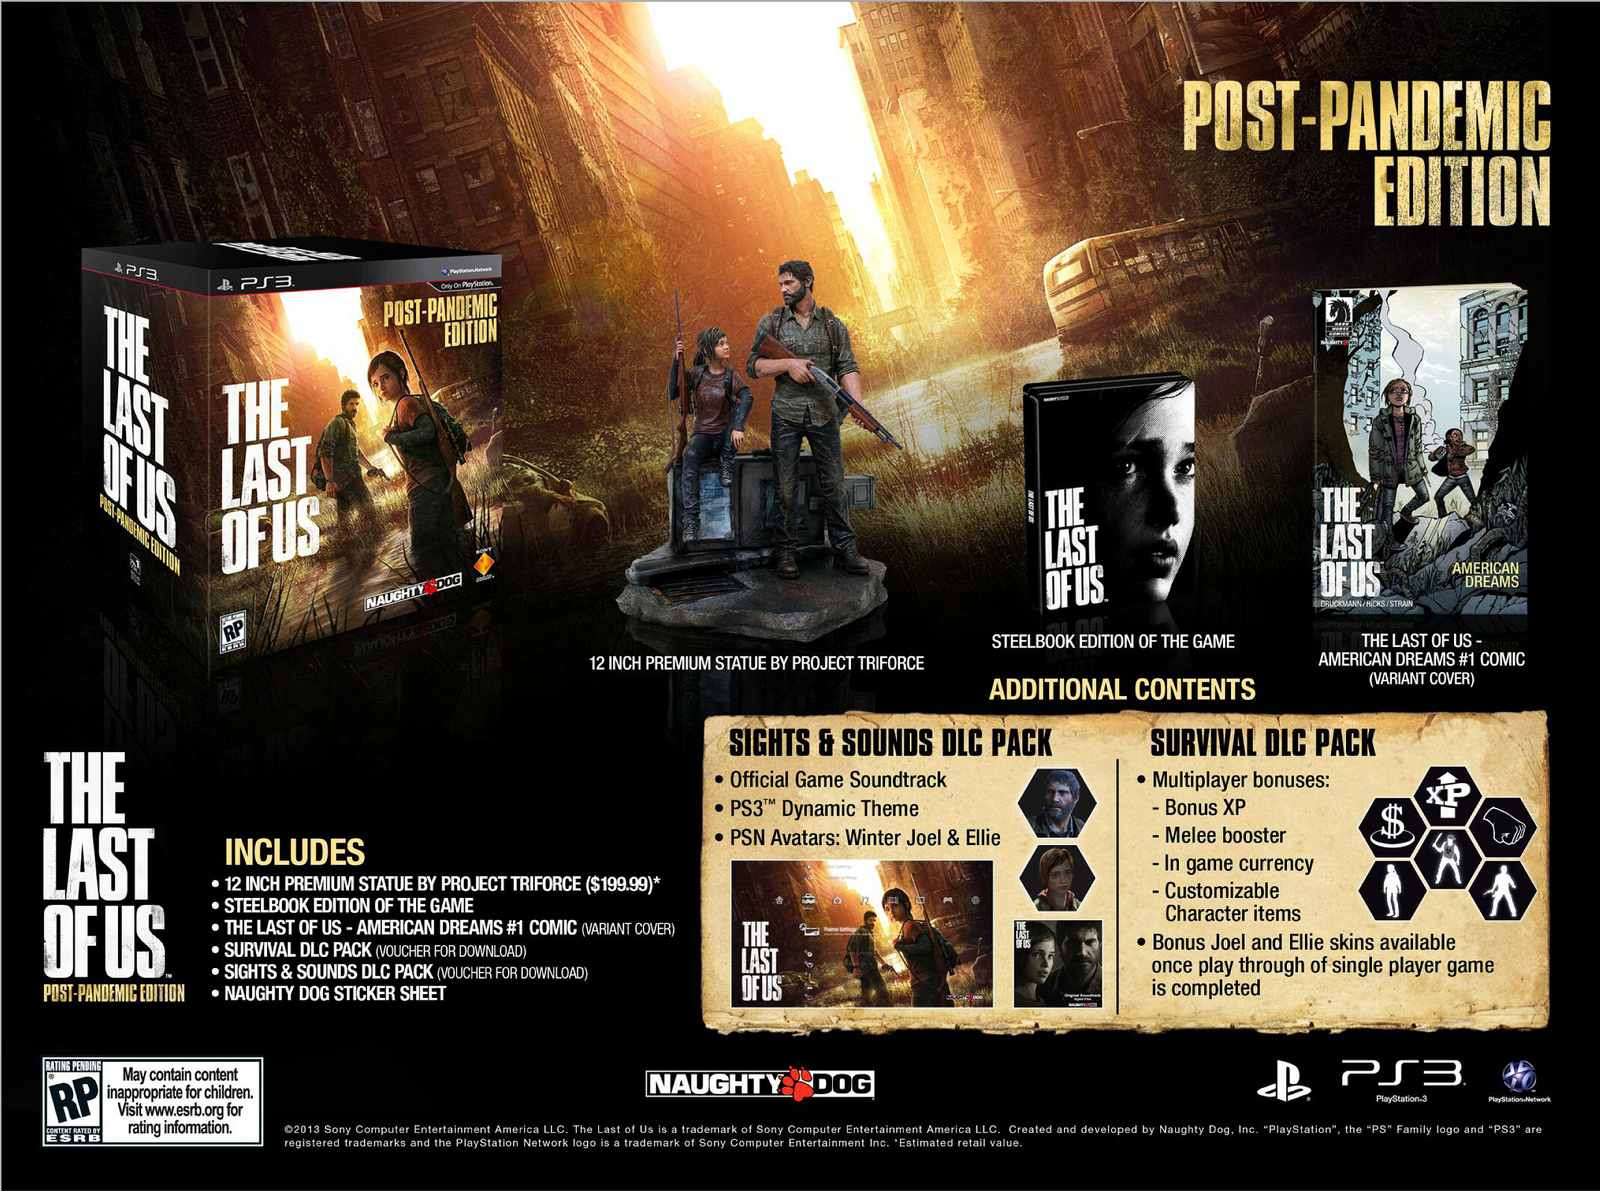 Fotky postaviček z post-pandemické edice The Last of Us 82476